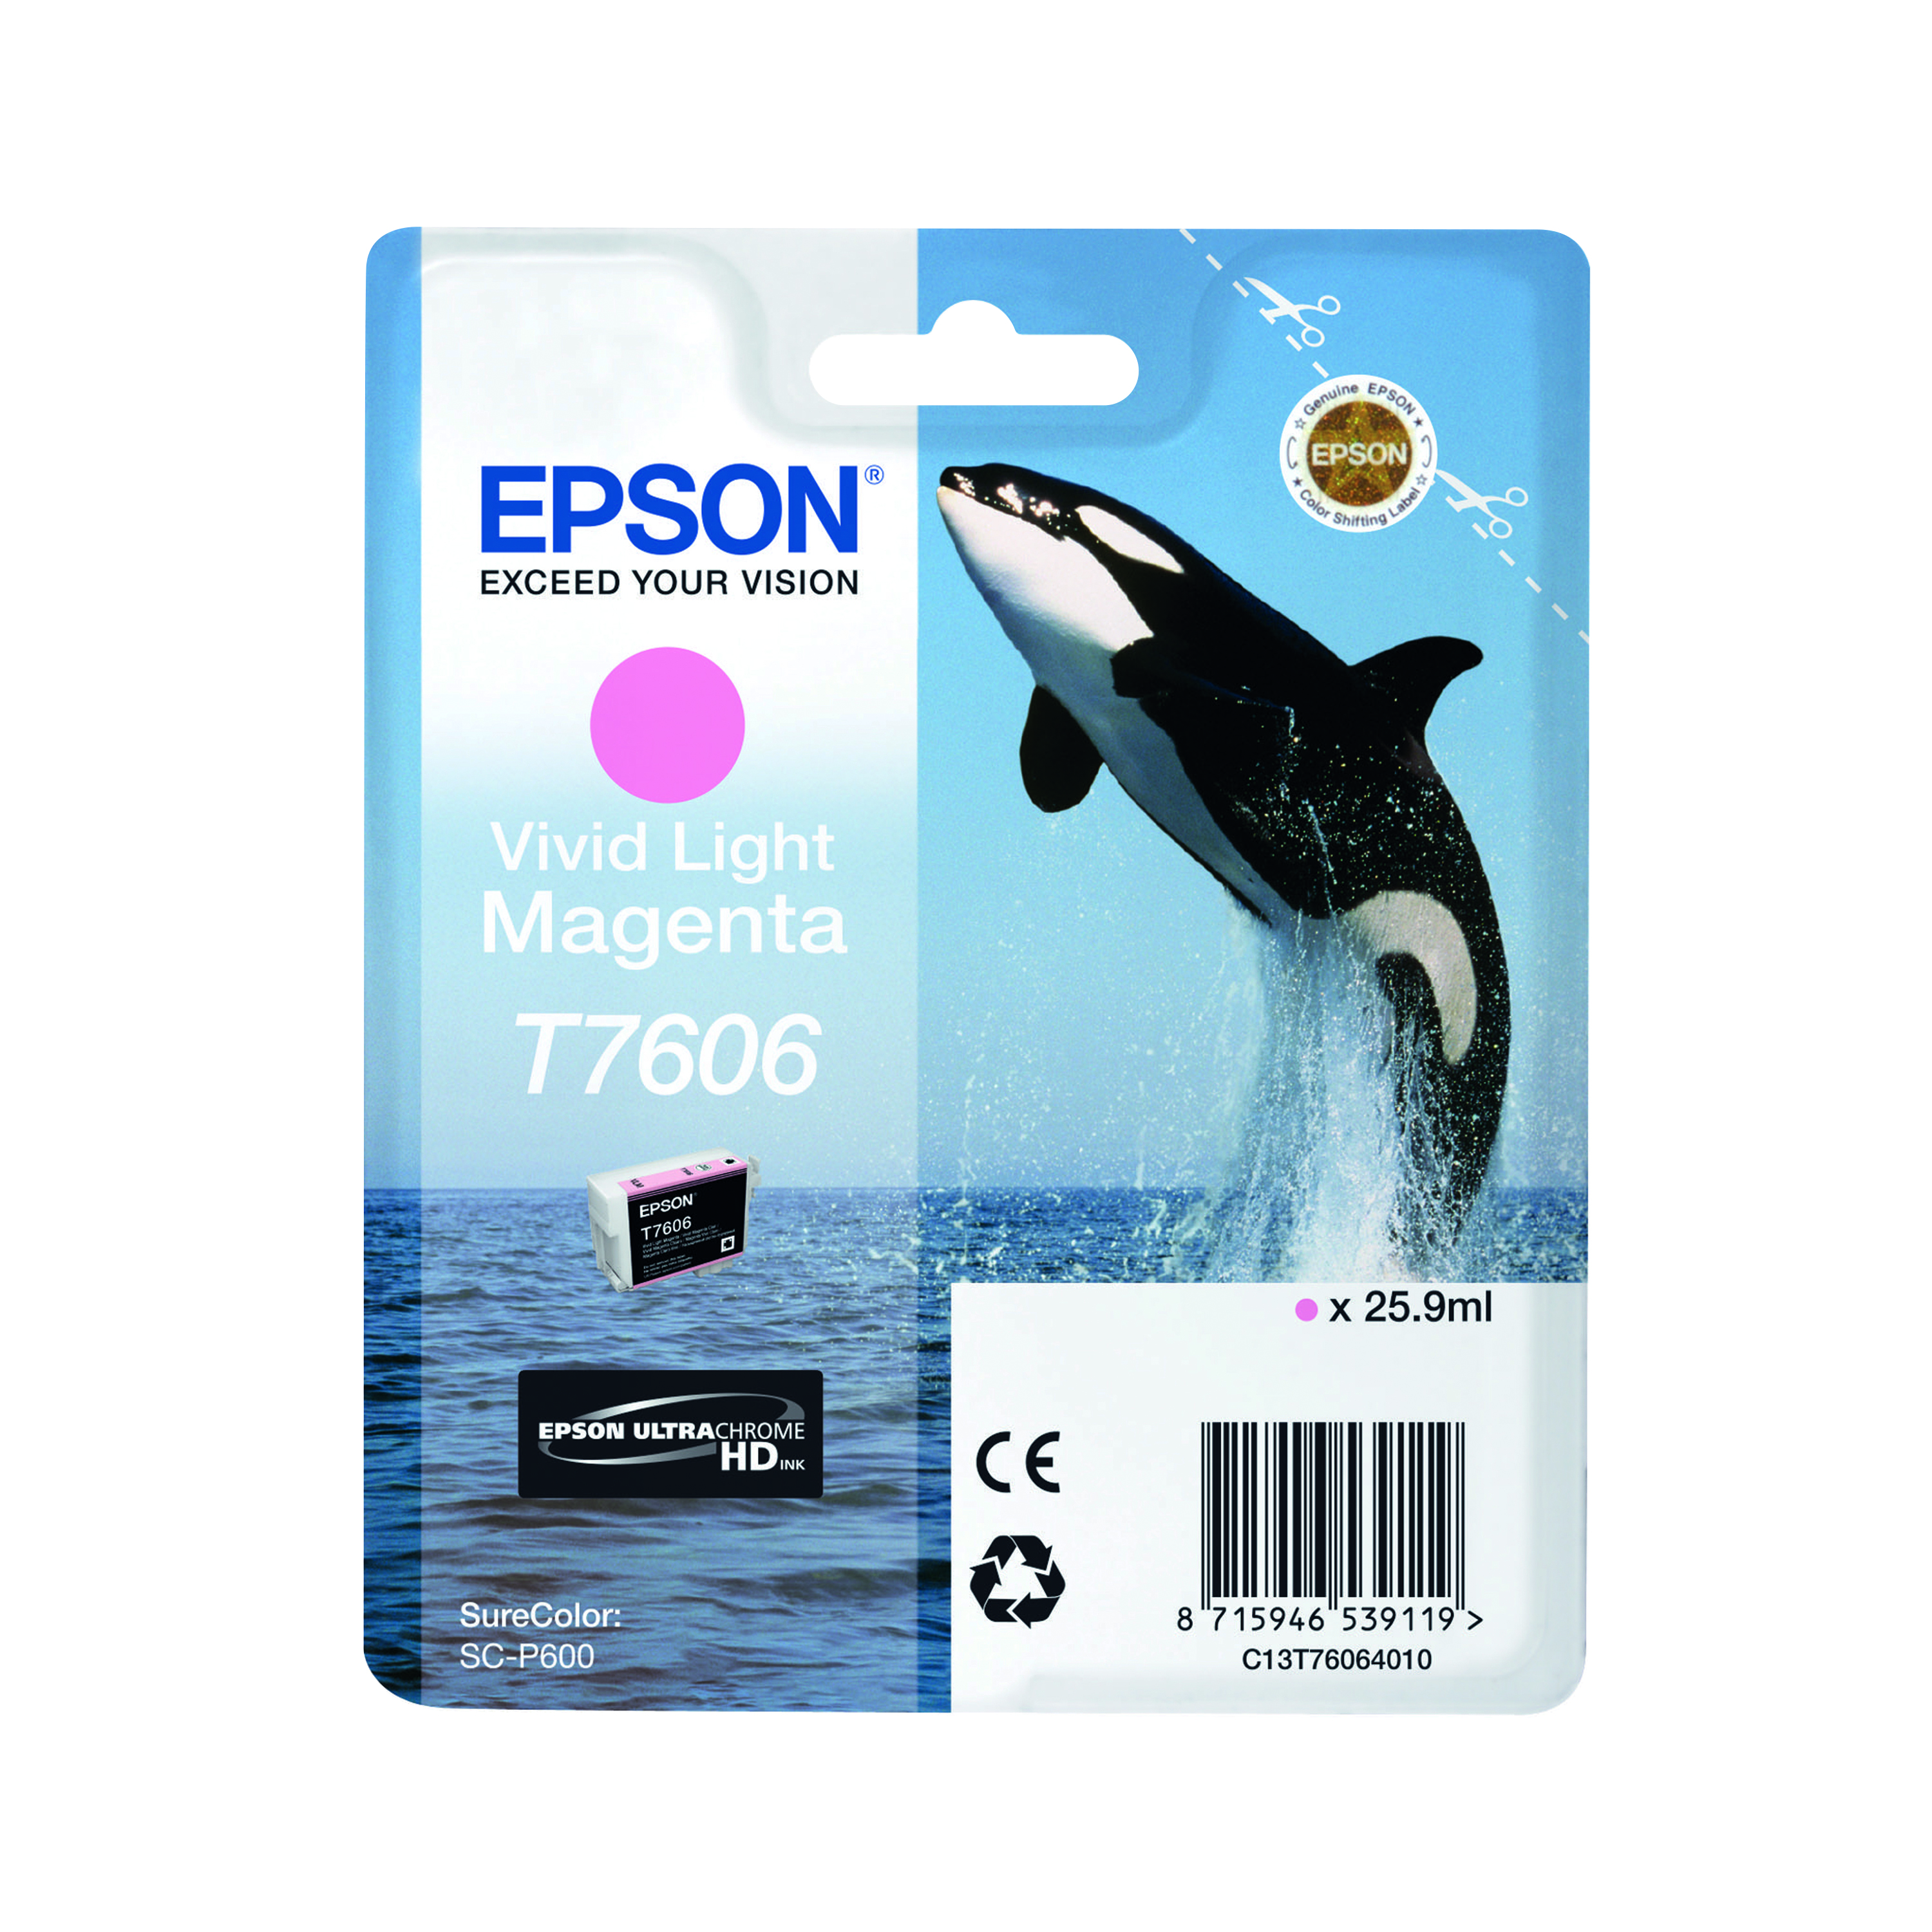 Epson T7606 Vivid Light Magenta Ink Cartridge C13T76064010 / T7606